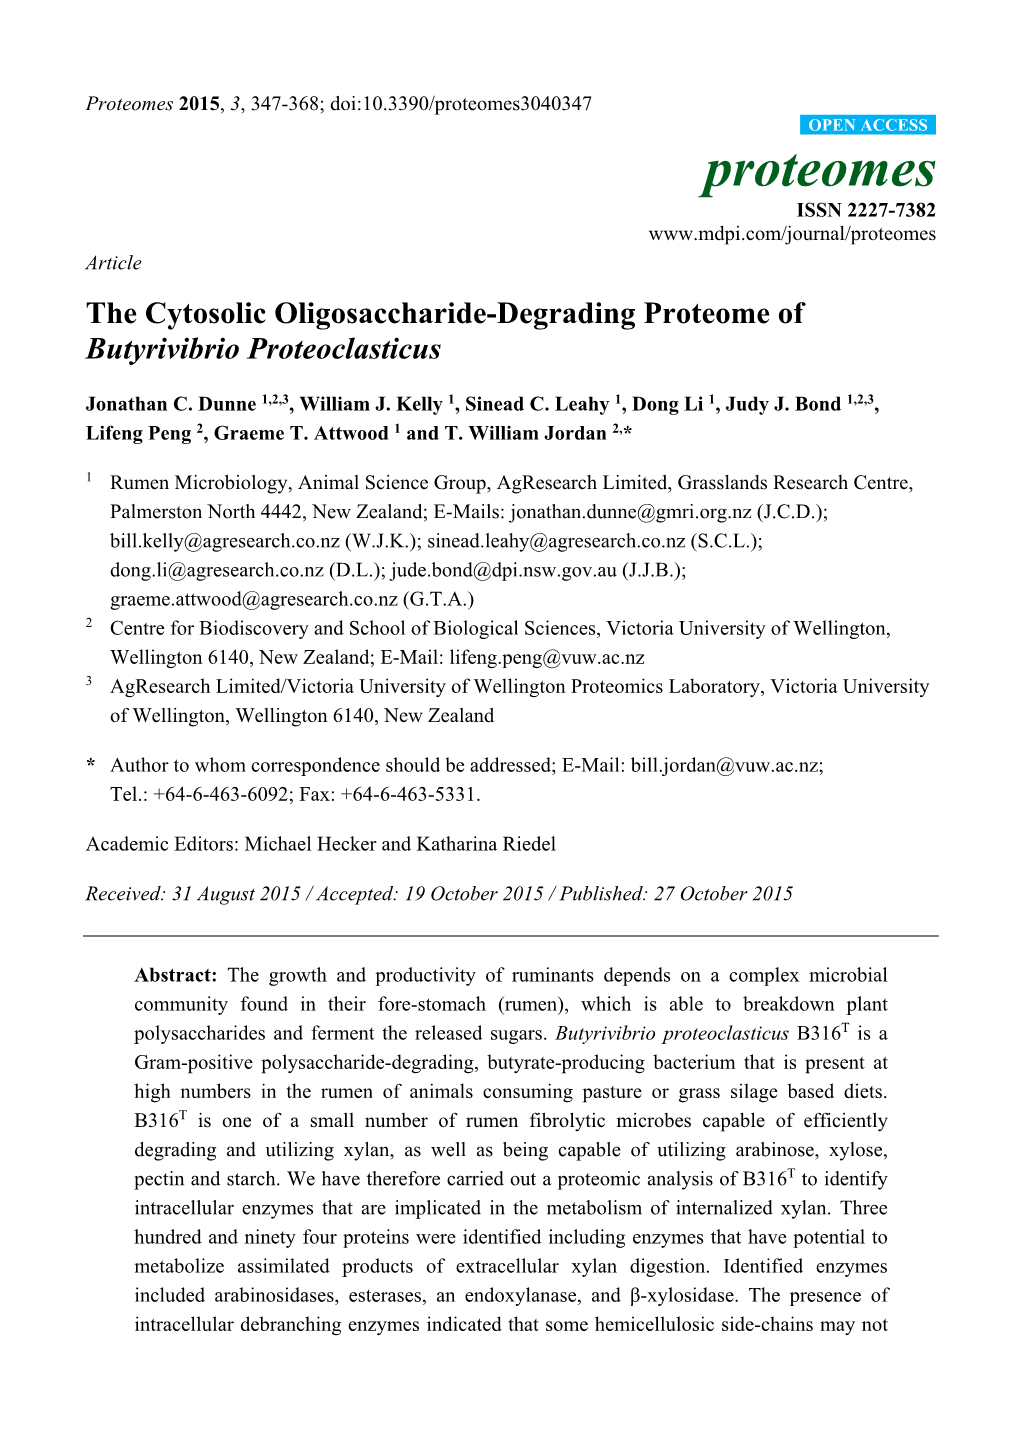 The Cytosolic Oligosaccharide-Degrading Proteome of Butyrivibrio Proteoclasticus